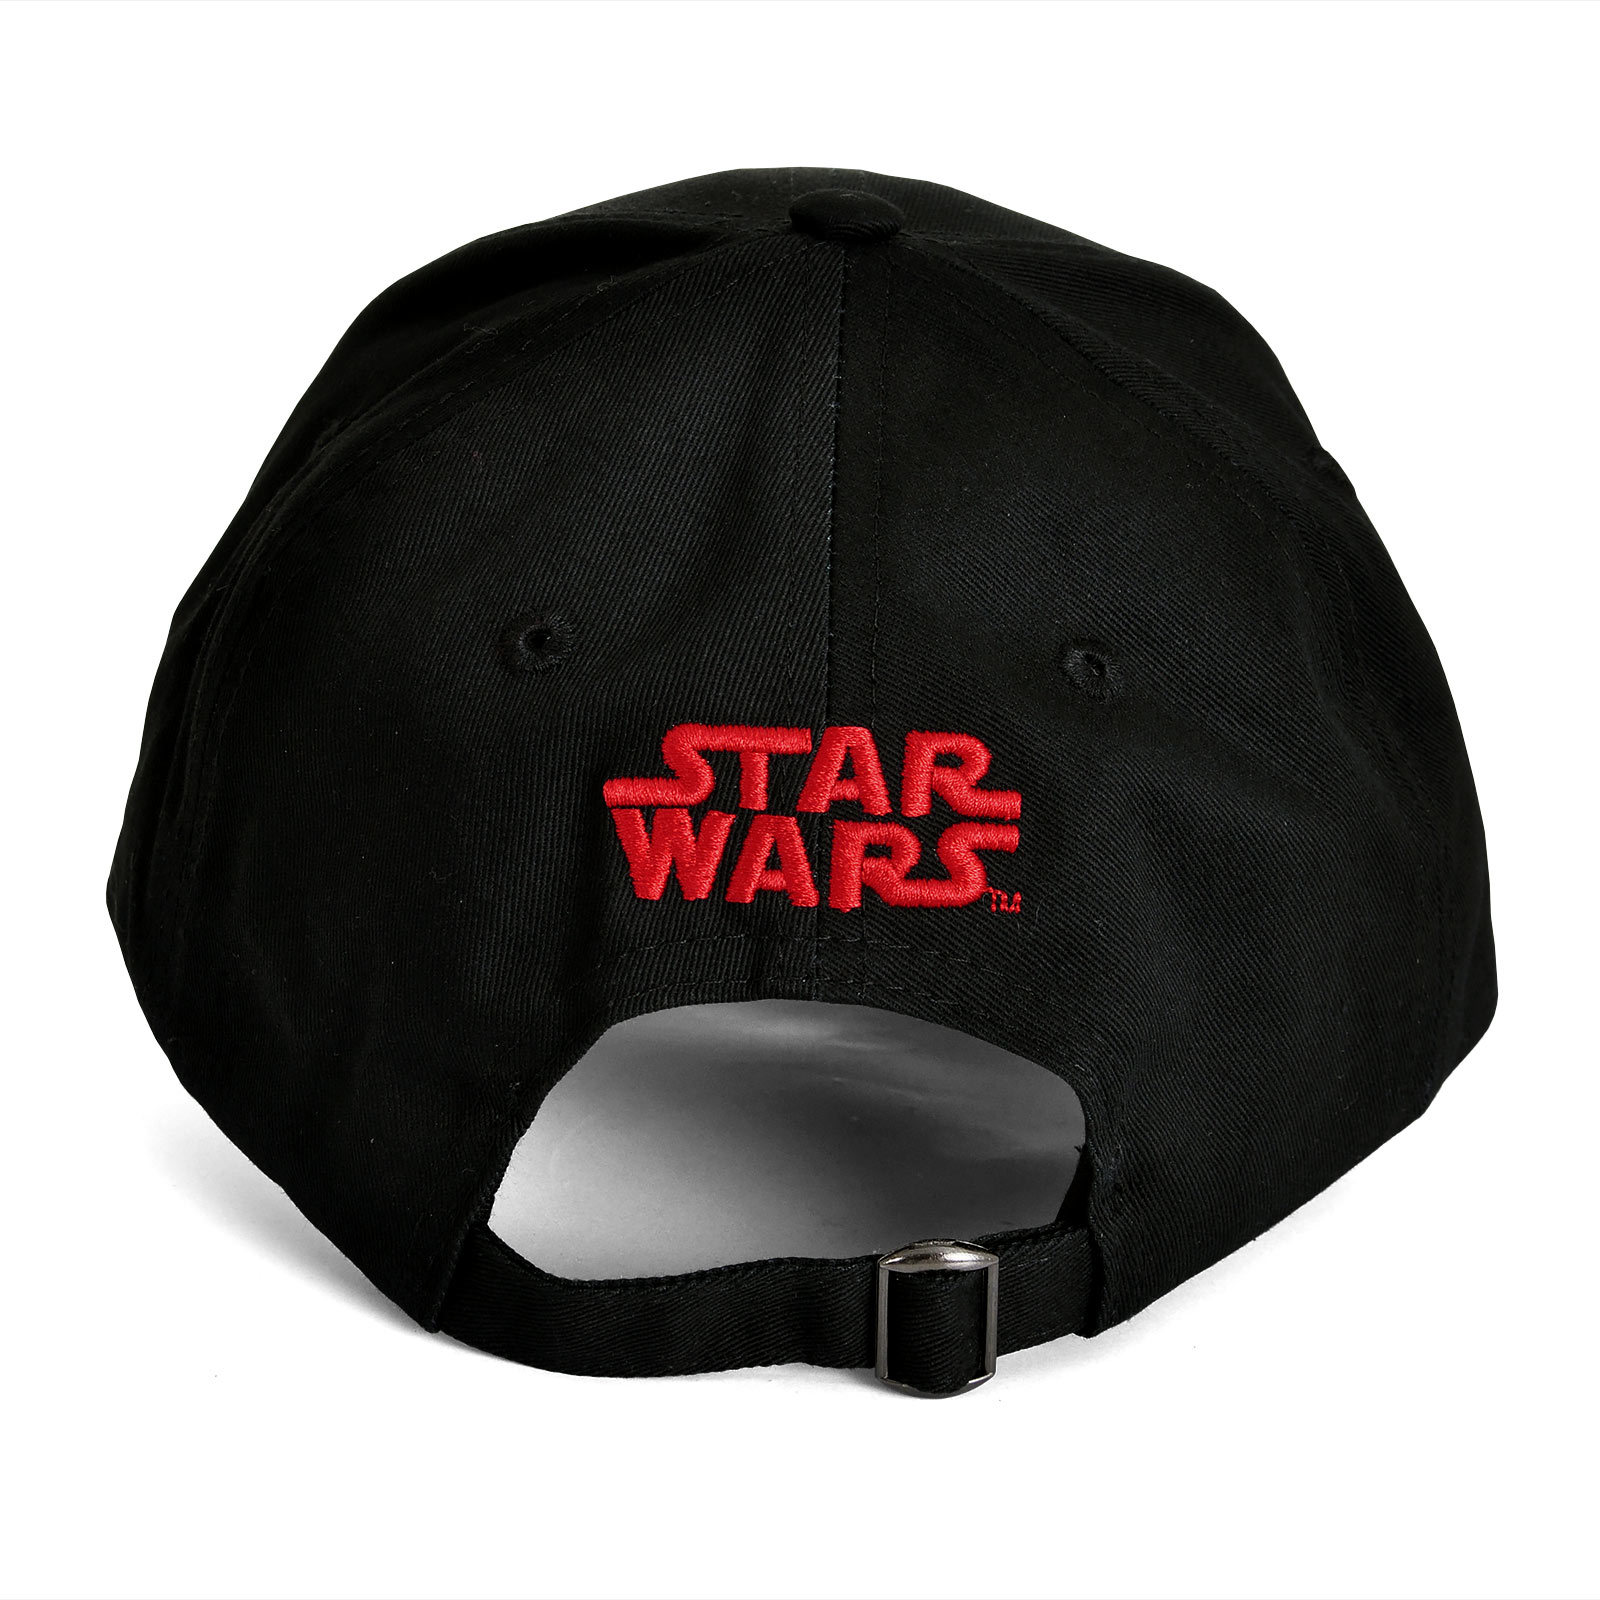 Star Wars - Dark Side Baseball Cap with Light Effect